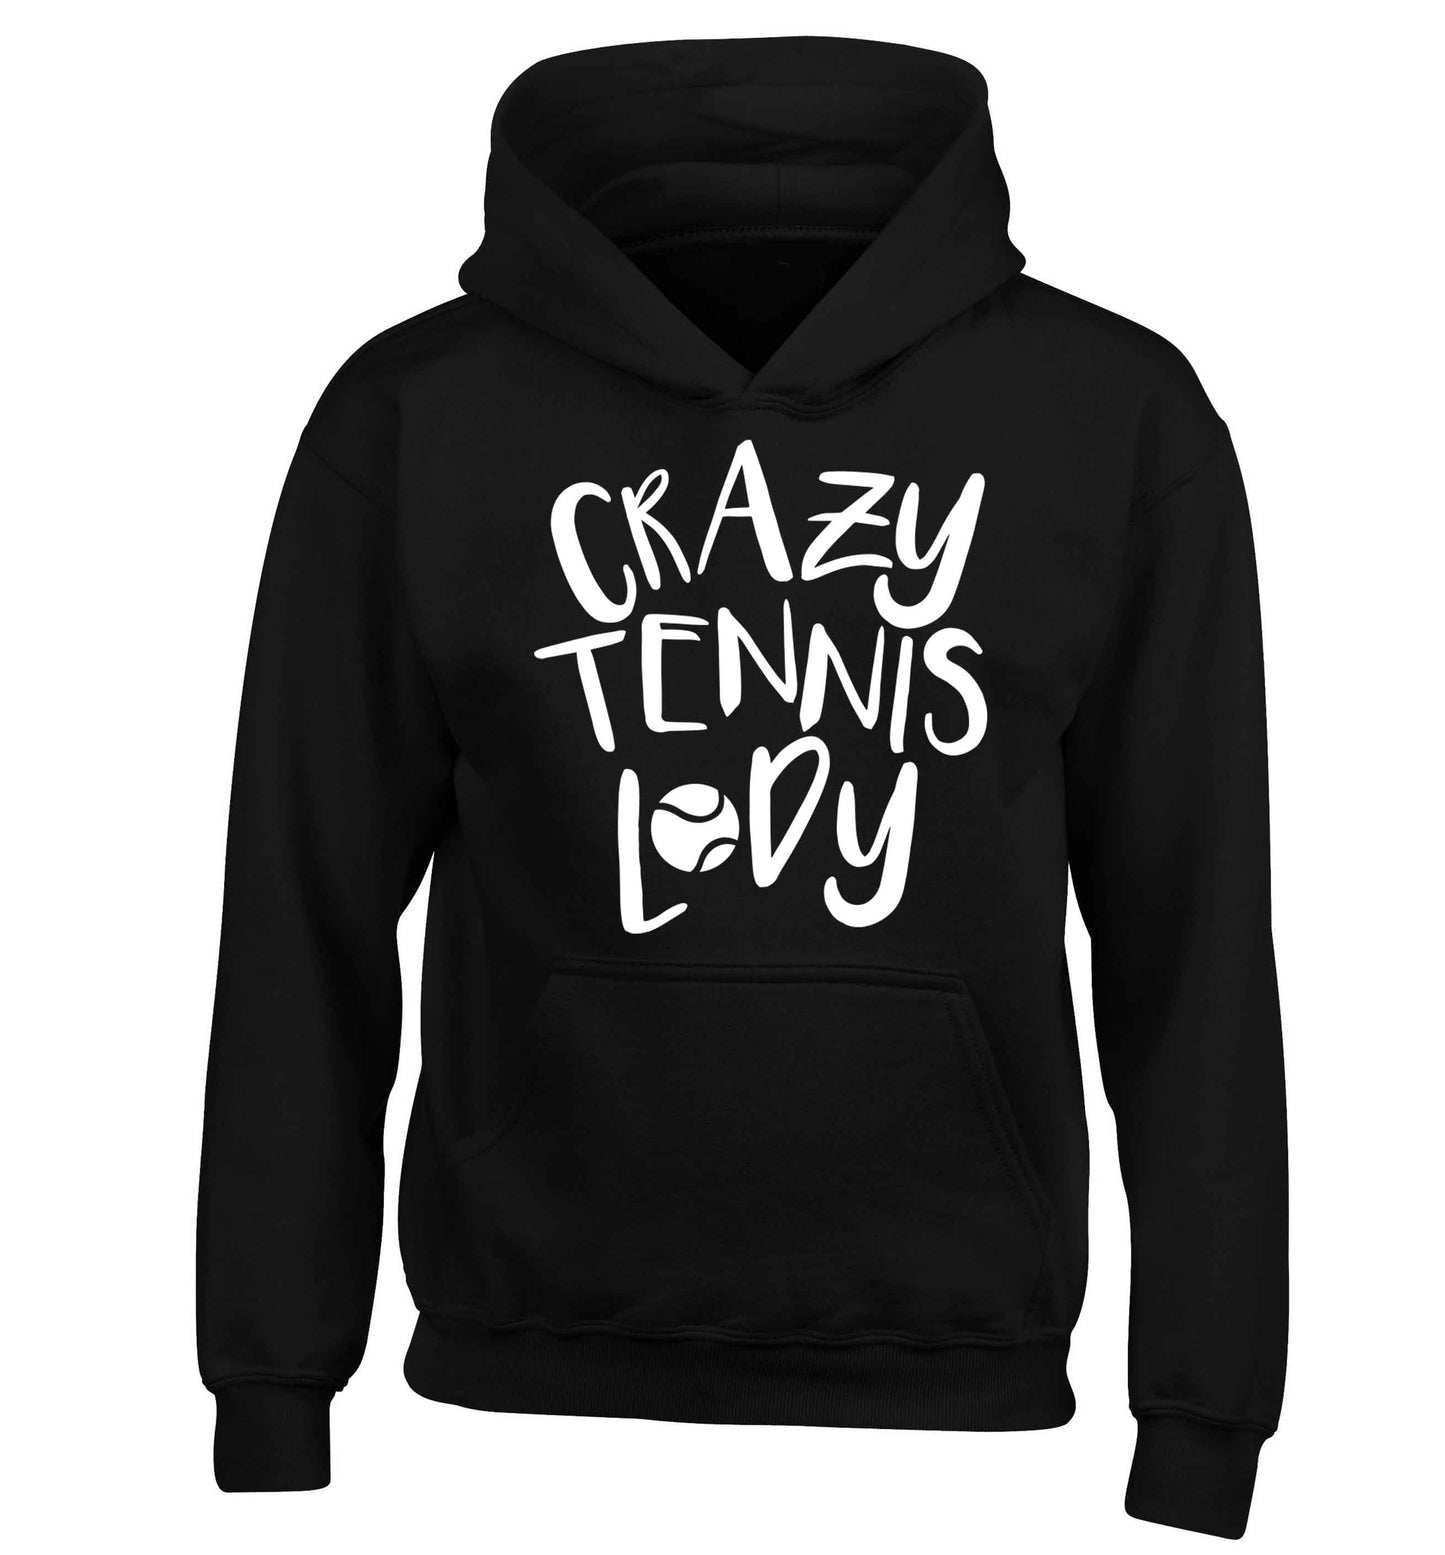 Crazy tennis lady children's black hoodie 12-13 Years